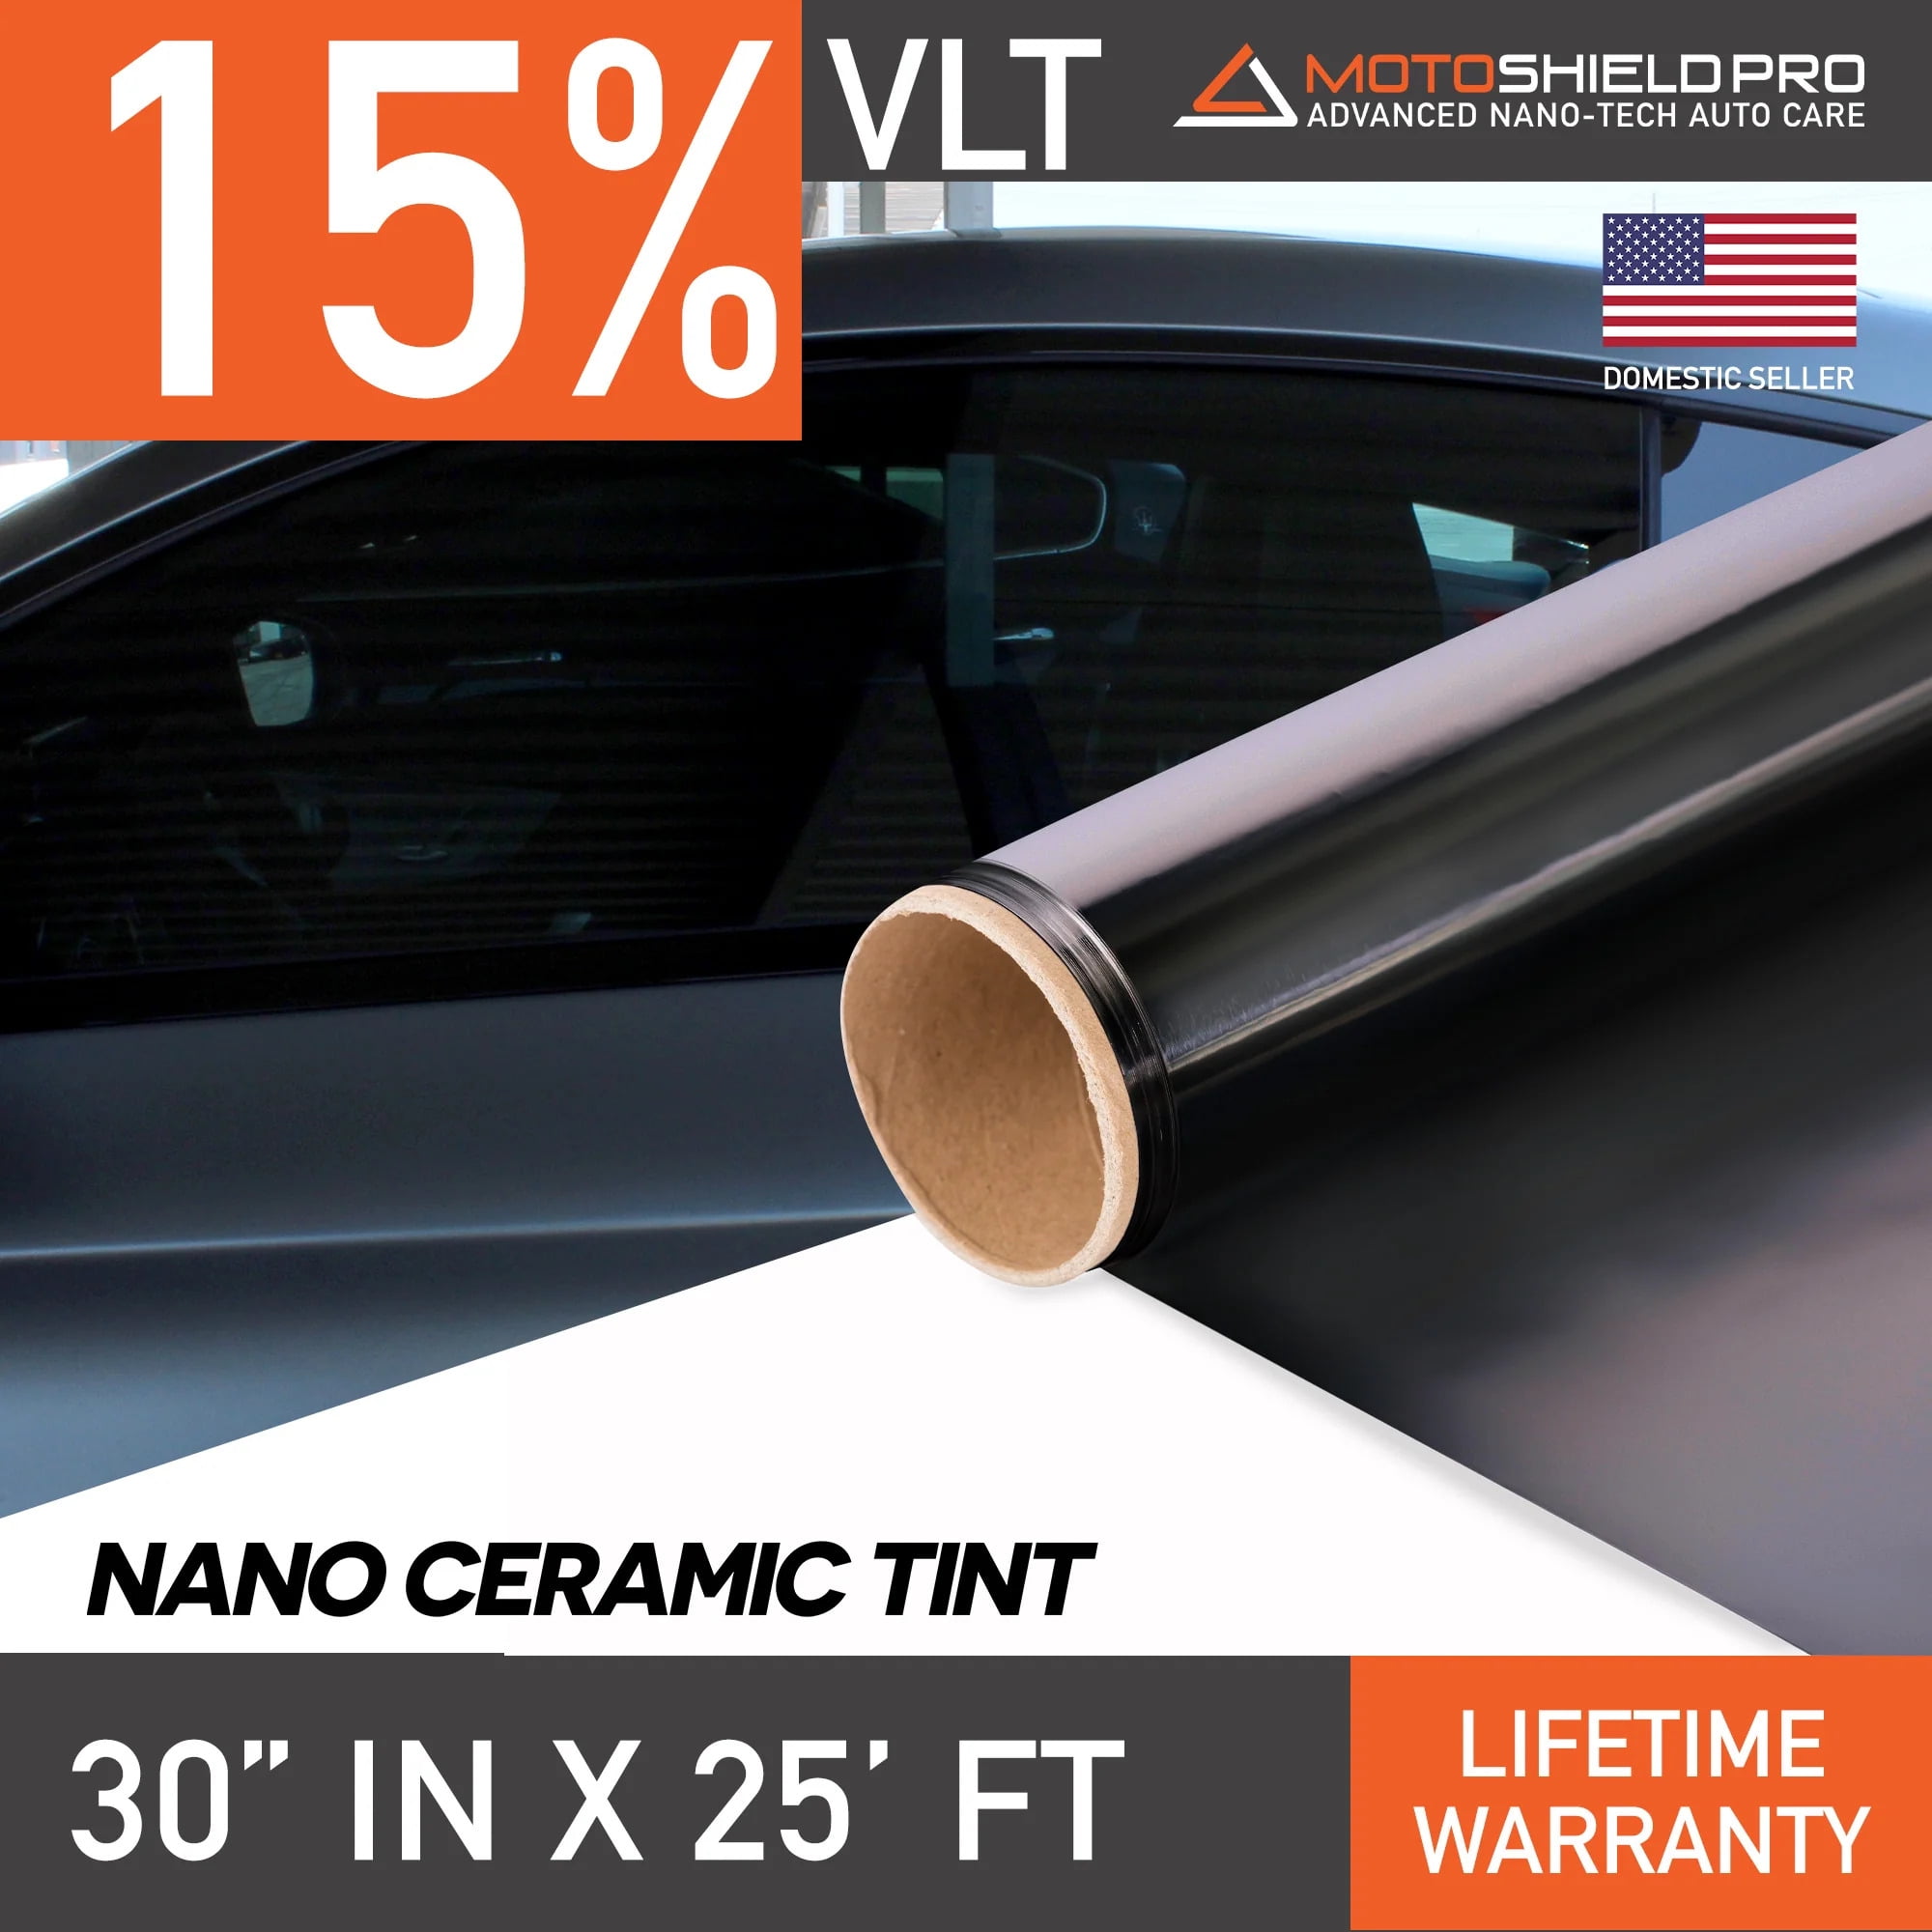 DIY-MotoShield Pro Premium Nano Ceramic Tint (25% VLT) 30” in x 5' ft Roll  | Professional Window Fil…See more DIY-MotoShield Pro Premium Nano Ceramic